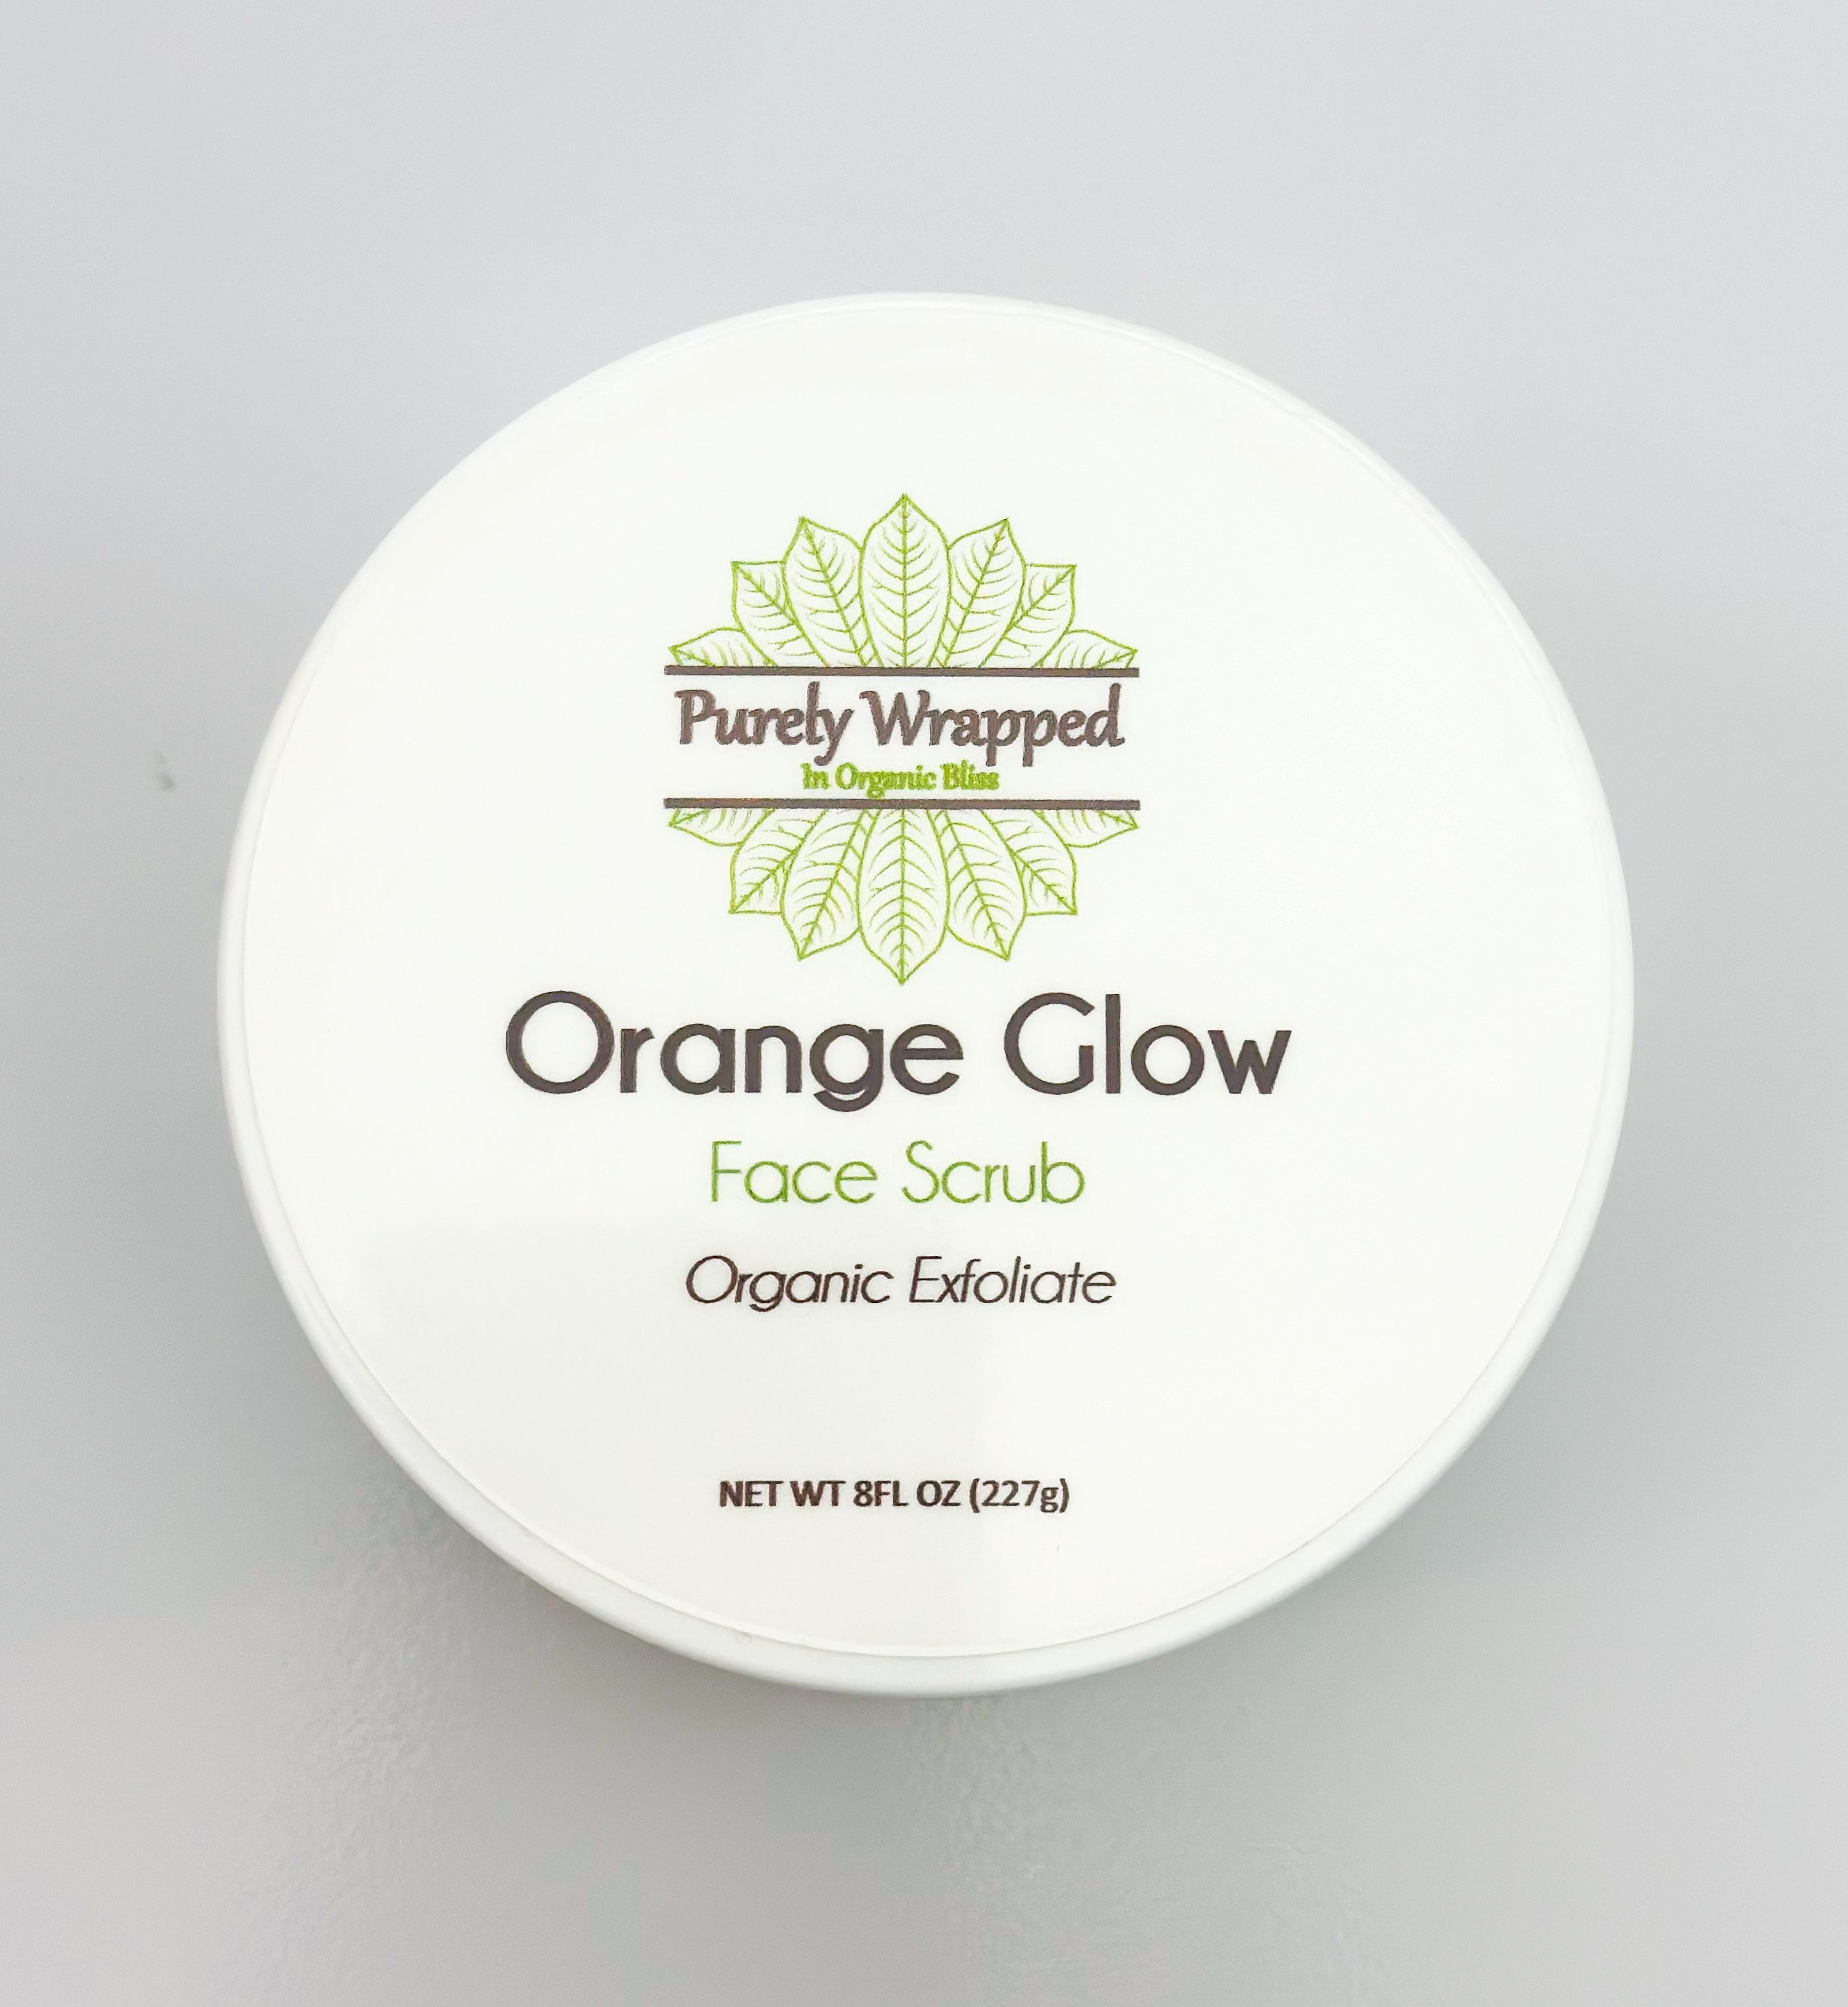 Orange Glow Face Scrub